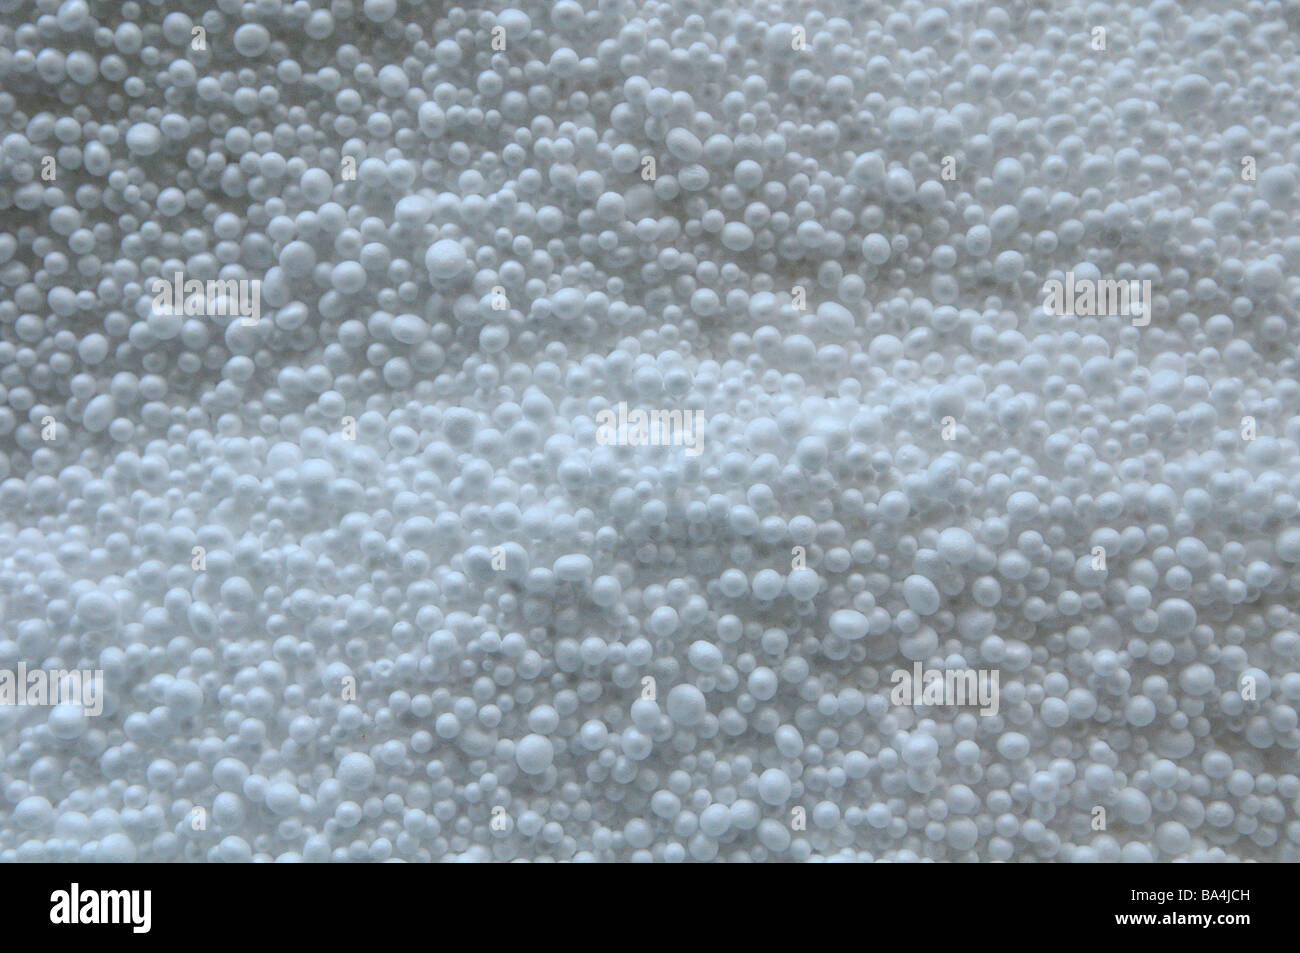 plast foam texture white, small balls buscar Stock Photo